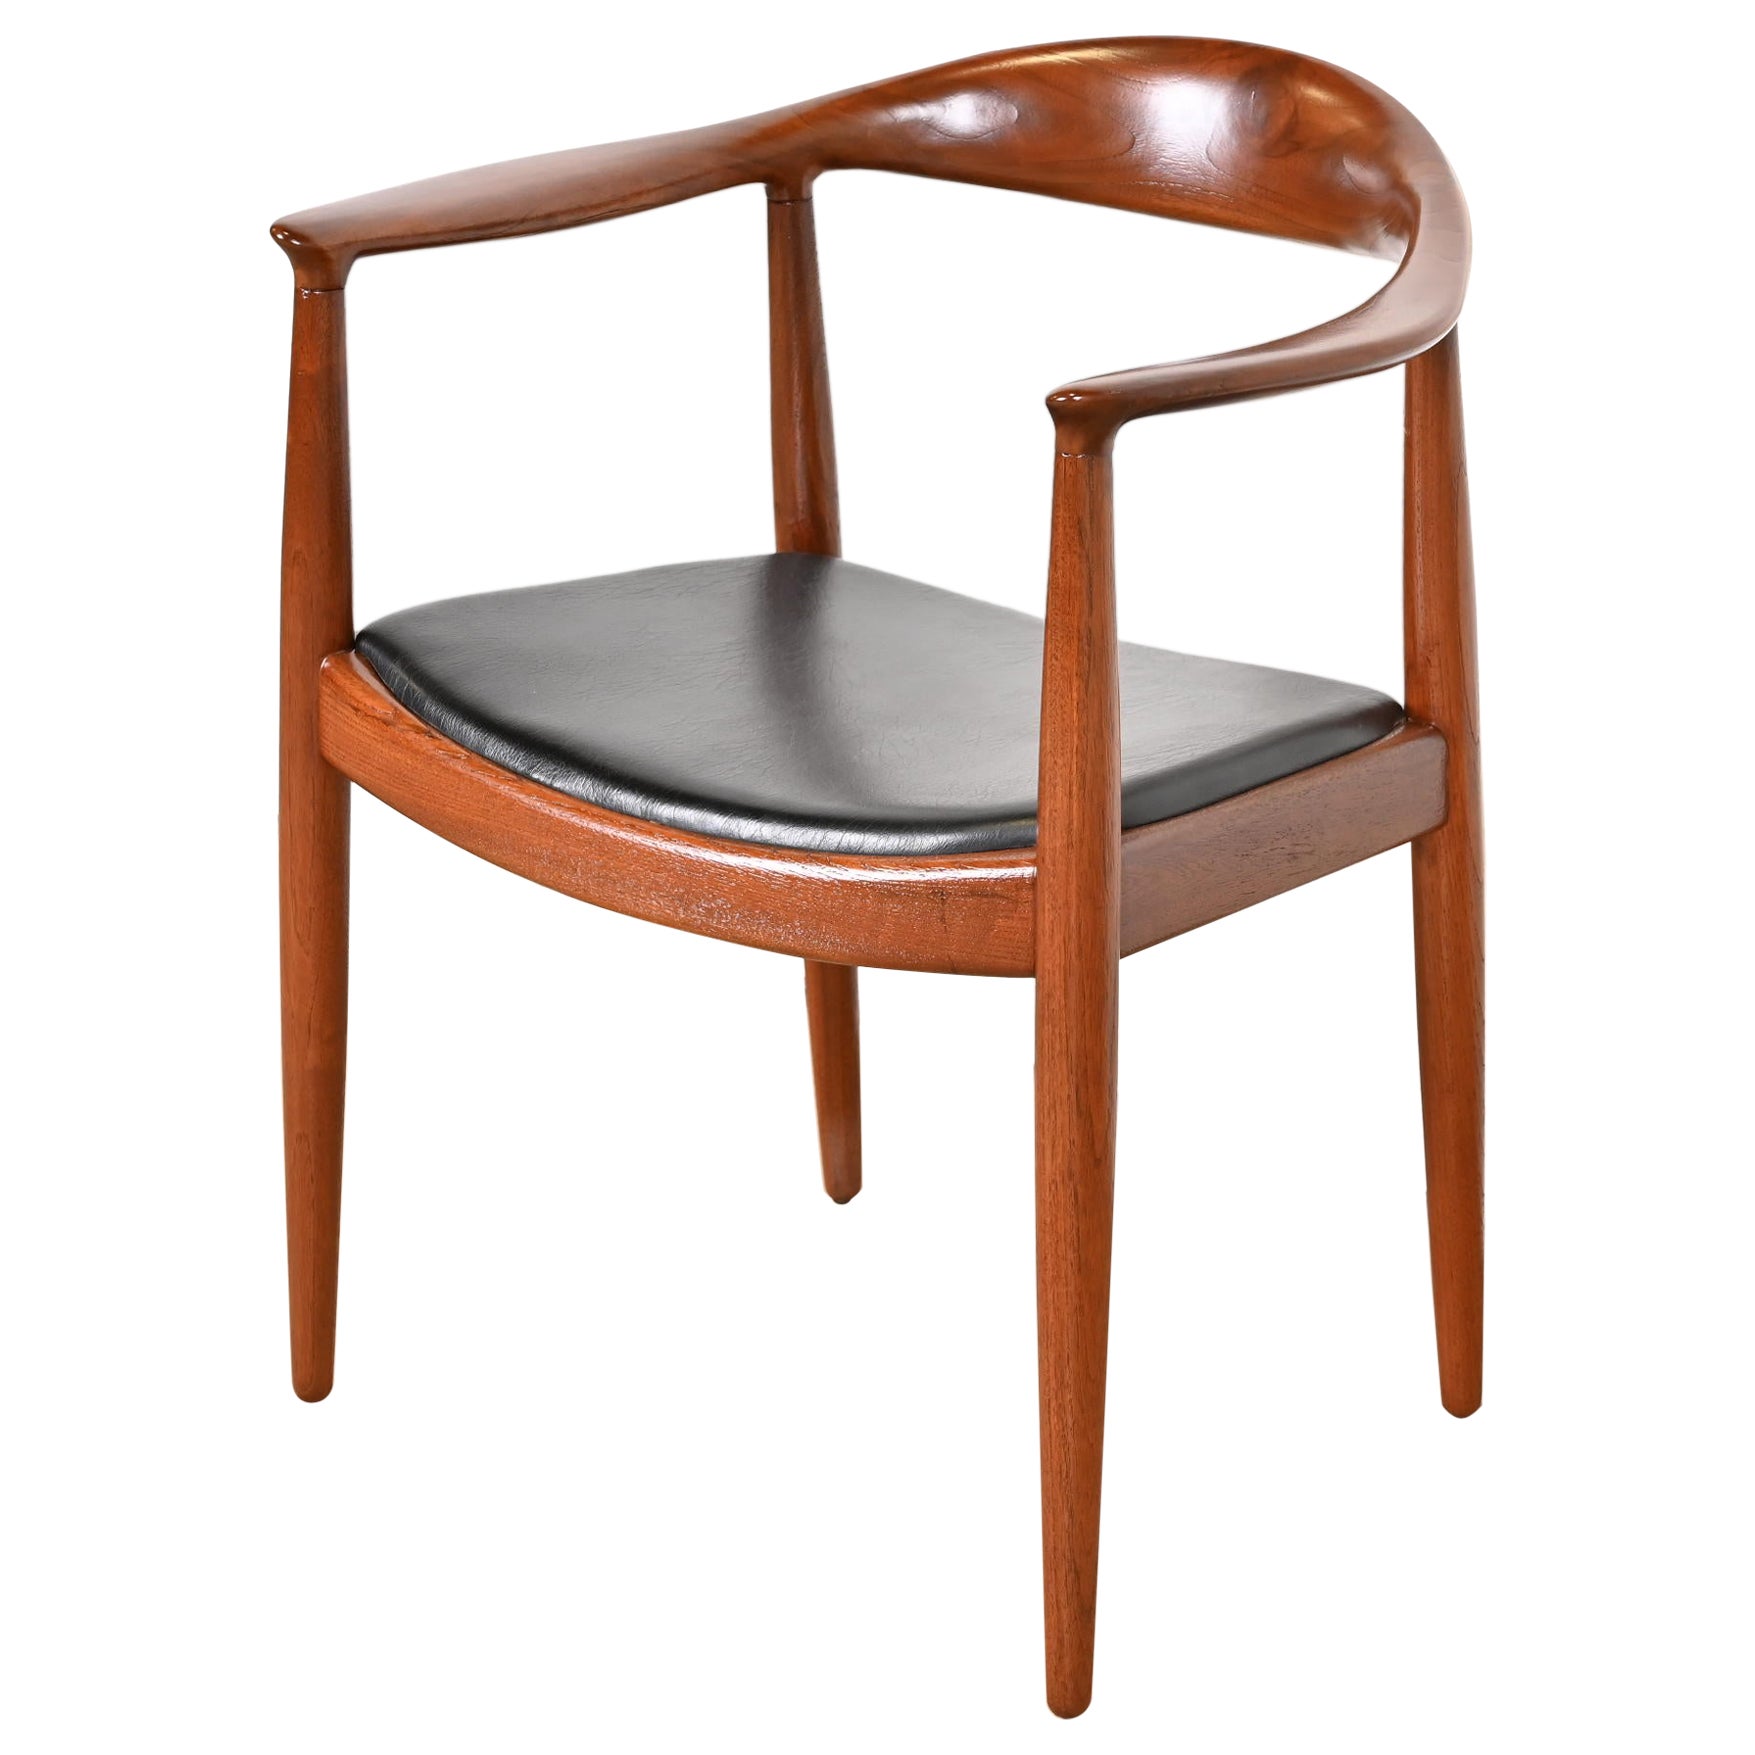 Hans Wegner for Johannes Hansen "The Chair" Teak and Leather Round Chair, 1960s